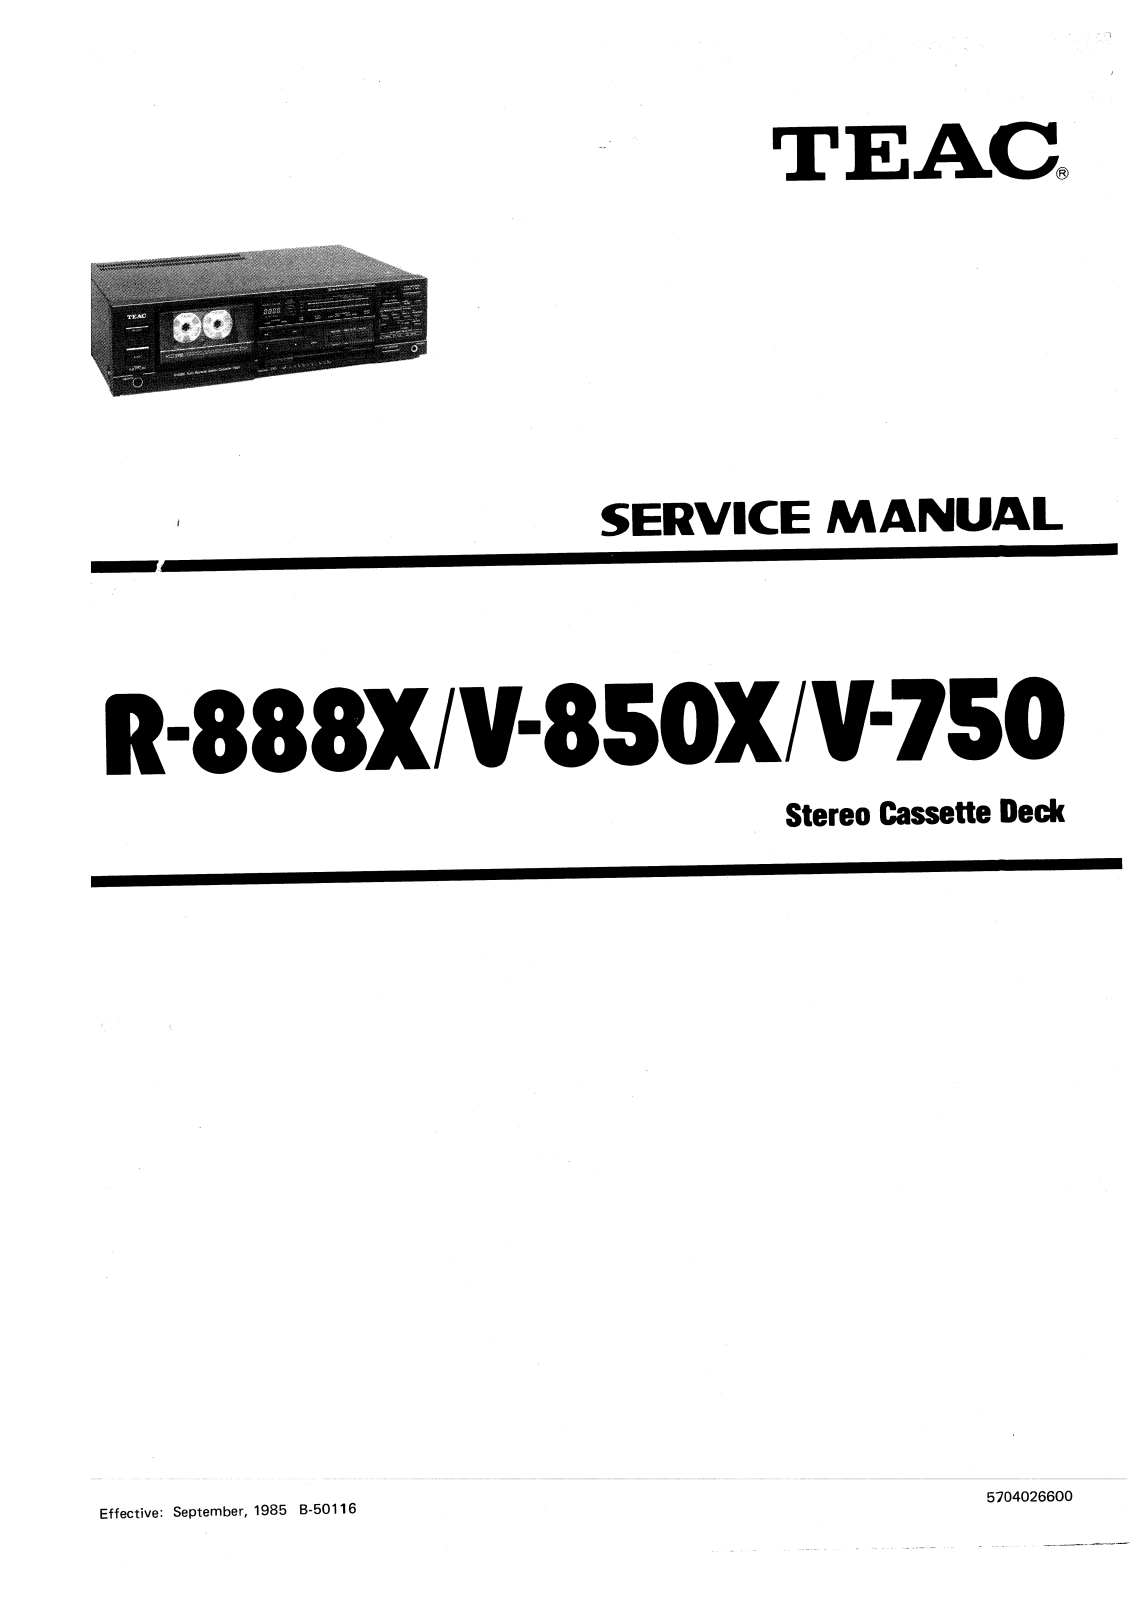 Teac v-750, 850x, r-888x Service Manual